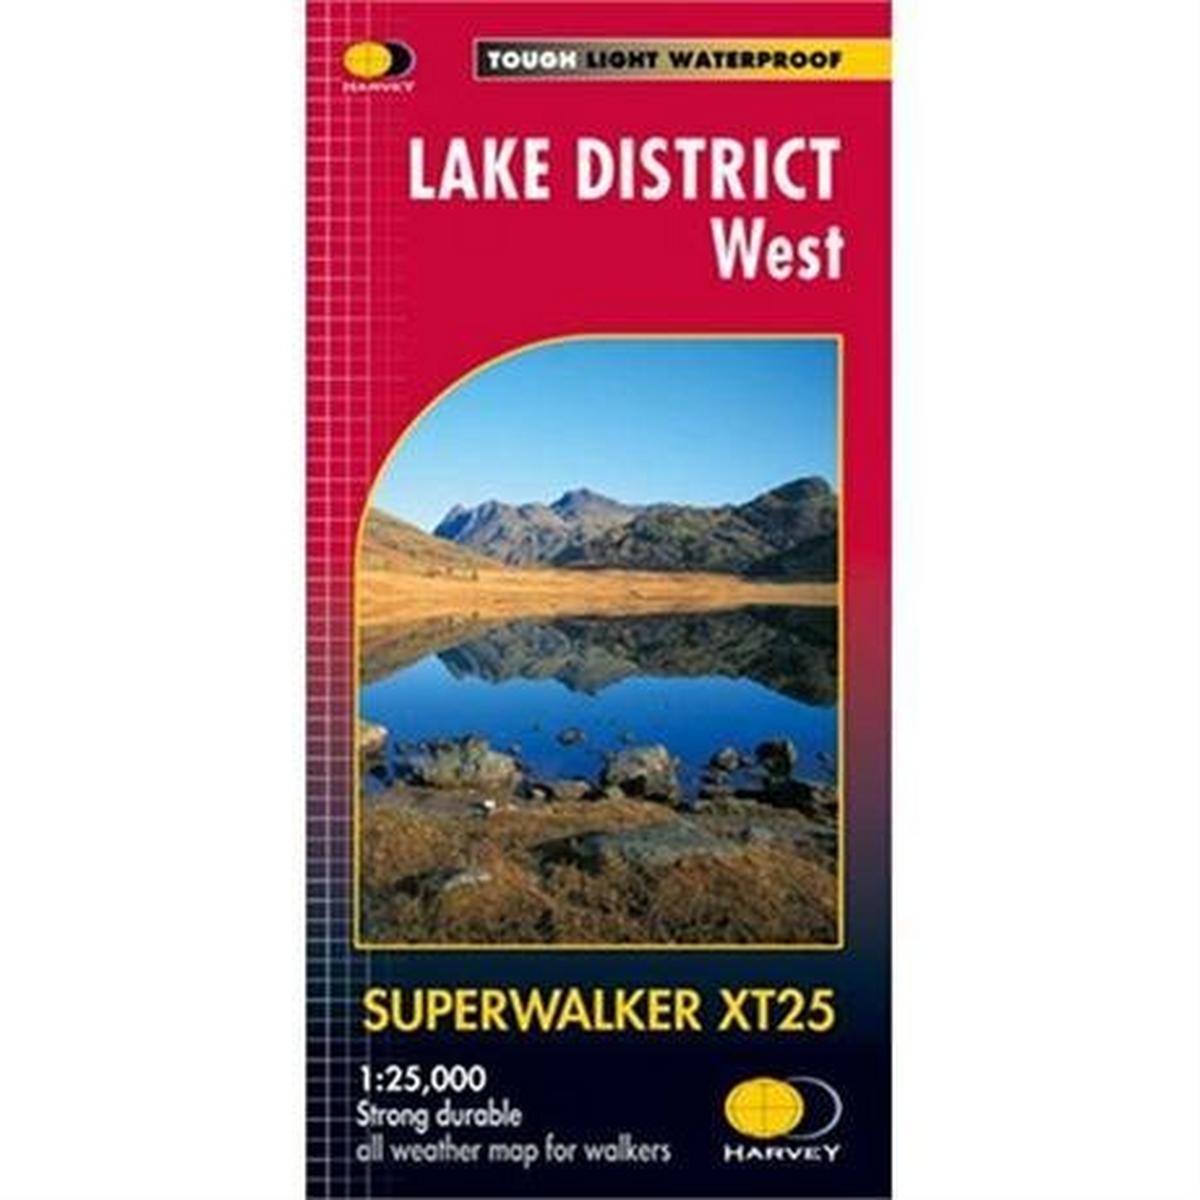 Harveys Harvey Map - Superwalker XT25: Lake District - West